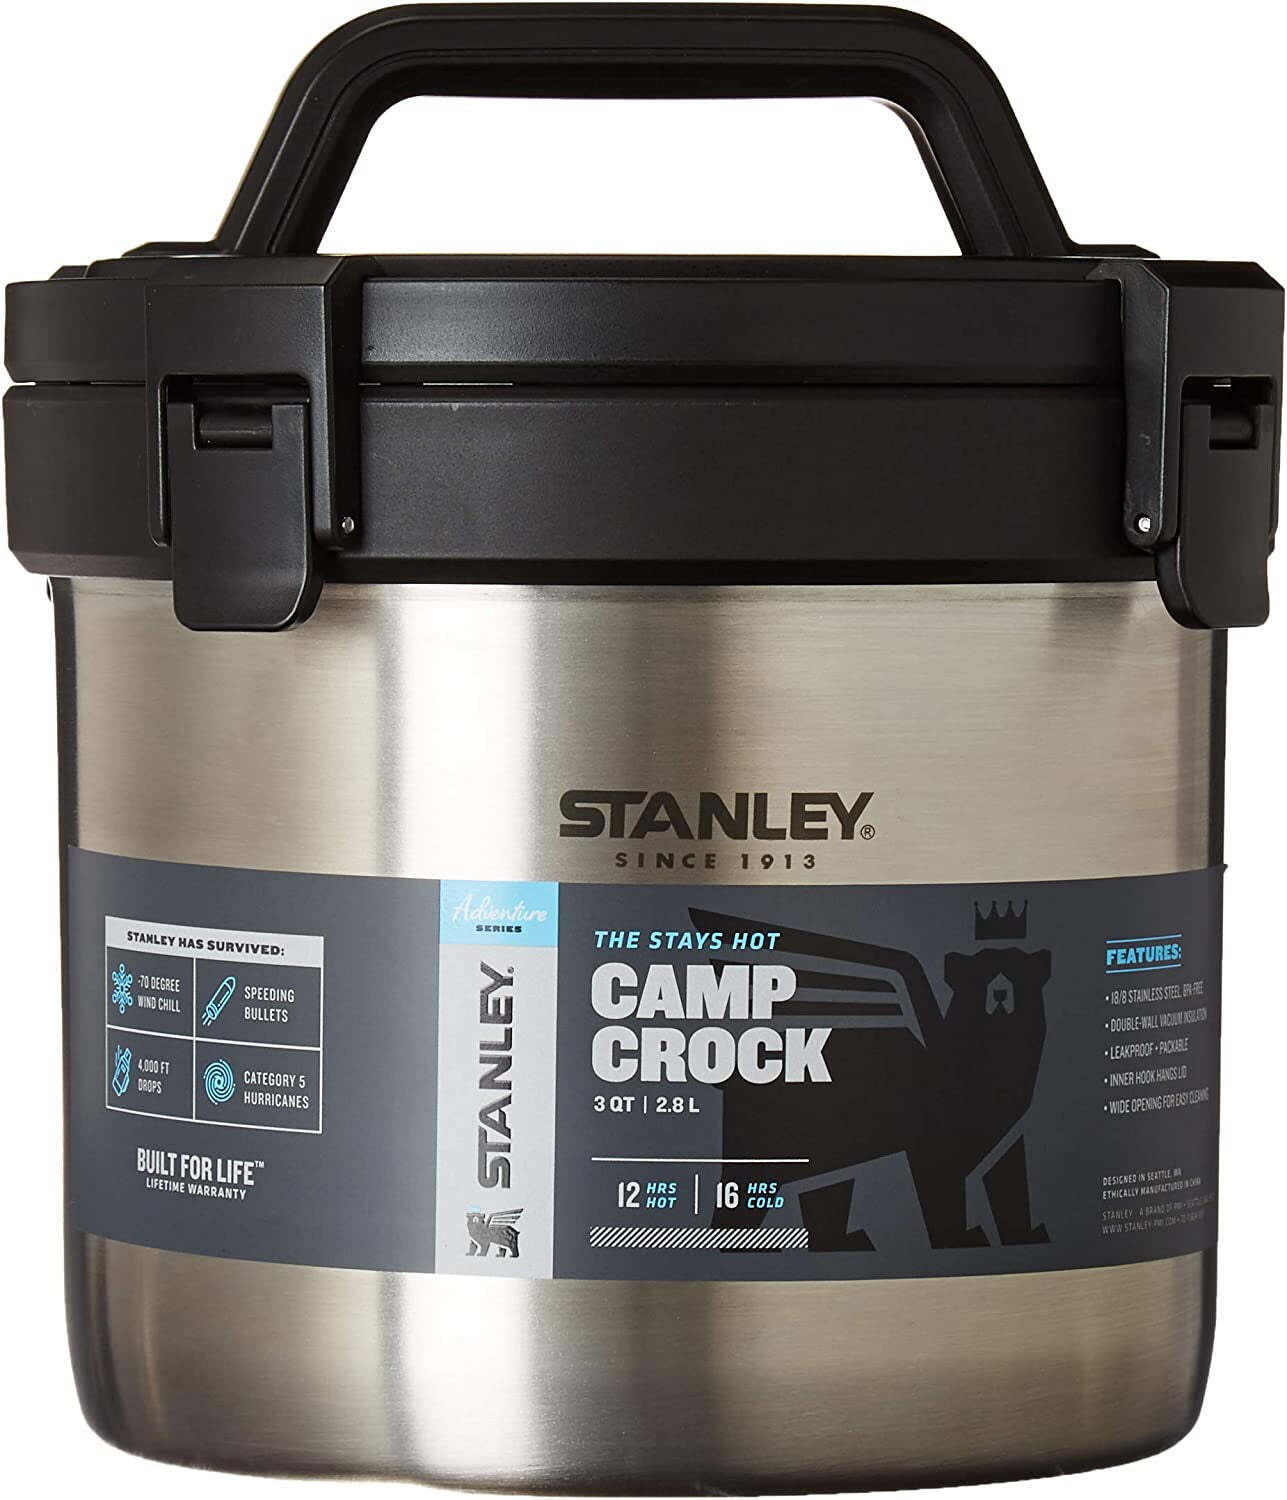 Stanley Adventure Camp Crock - 2.8L 